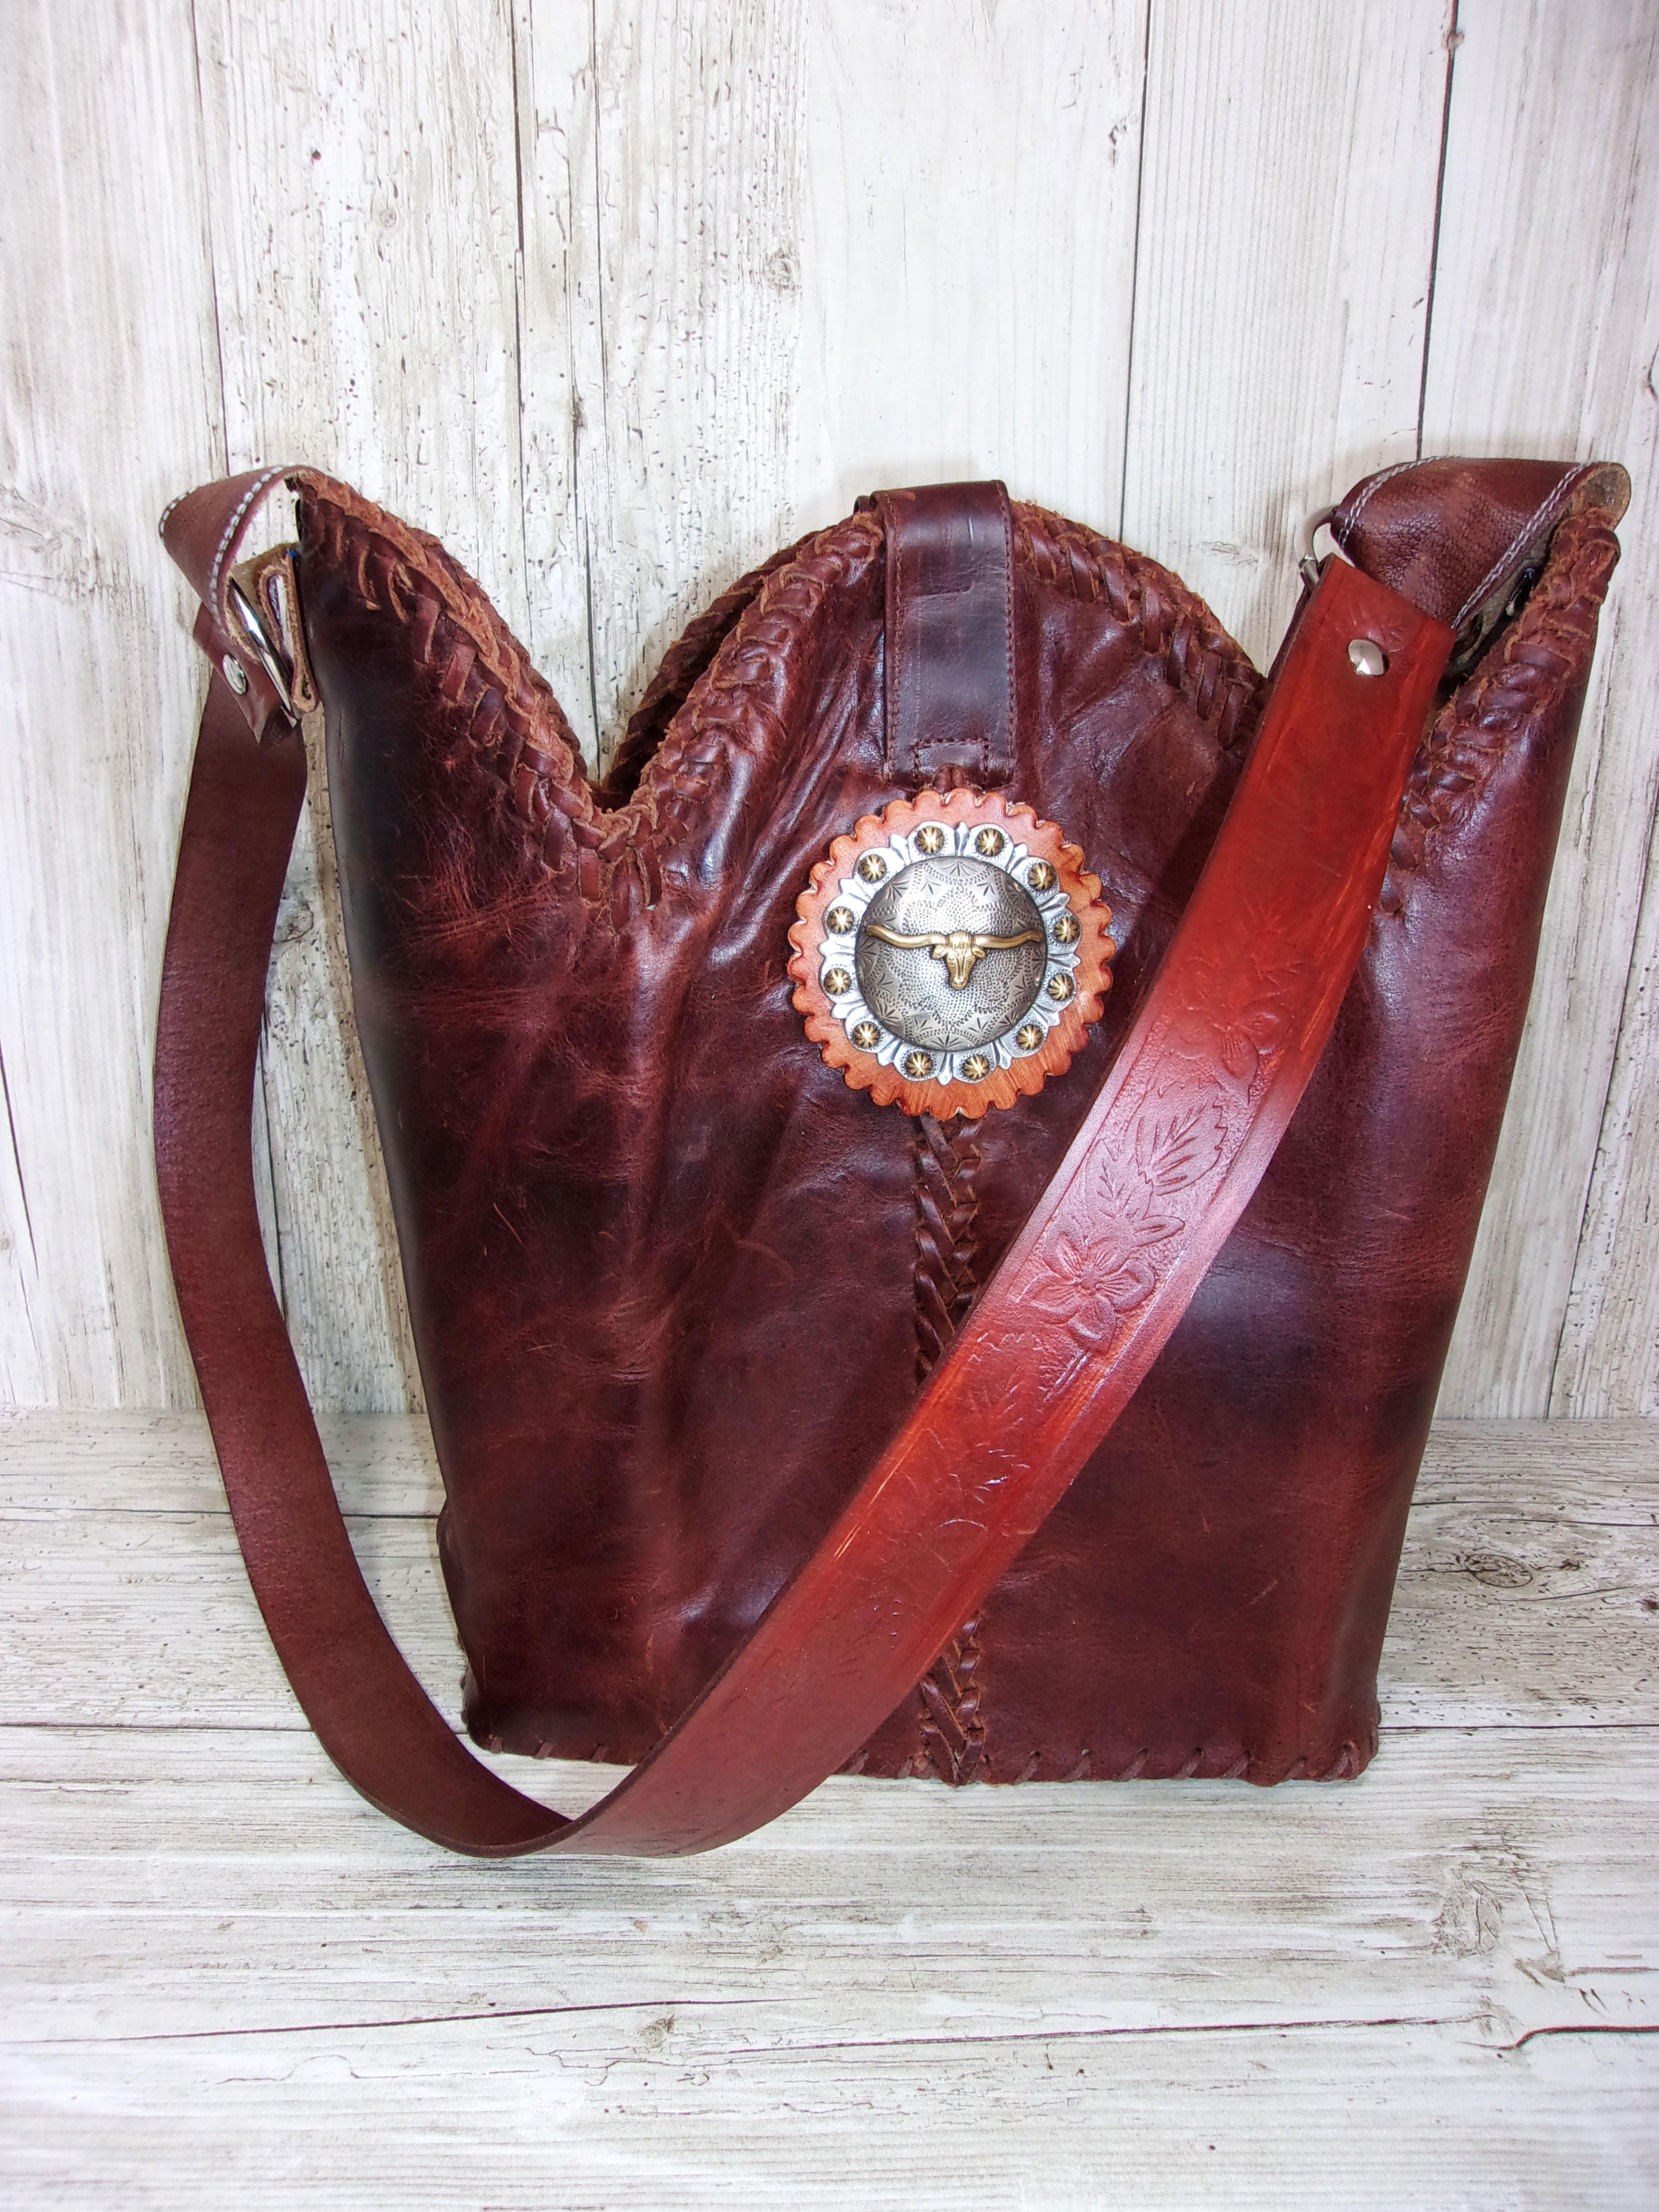 Cowboy Boot Purse - Handmade Leather Purse - Western Leather Purse BK76 cowboy boot purses, western fringe purse, handmade leather purses, boot purse, handmade western purse, custom leather handbags Chris Thompson Bags